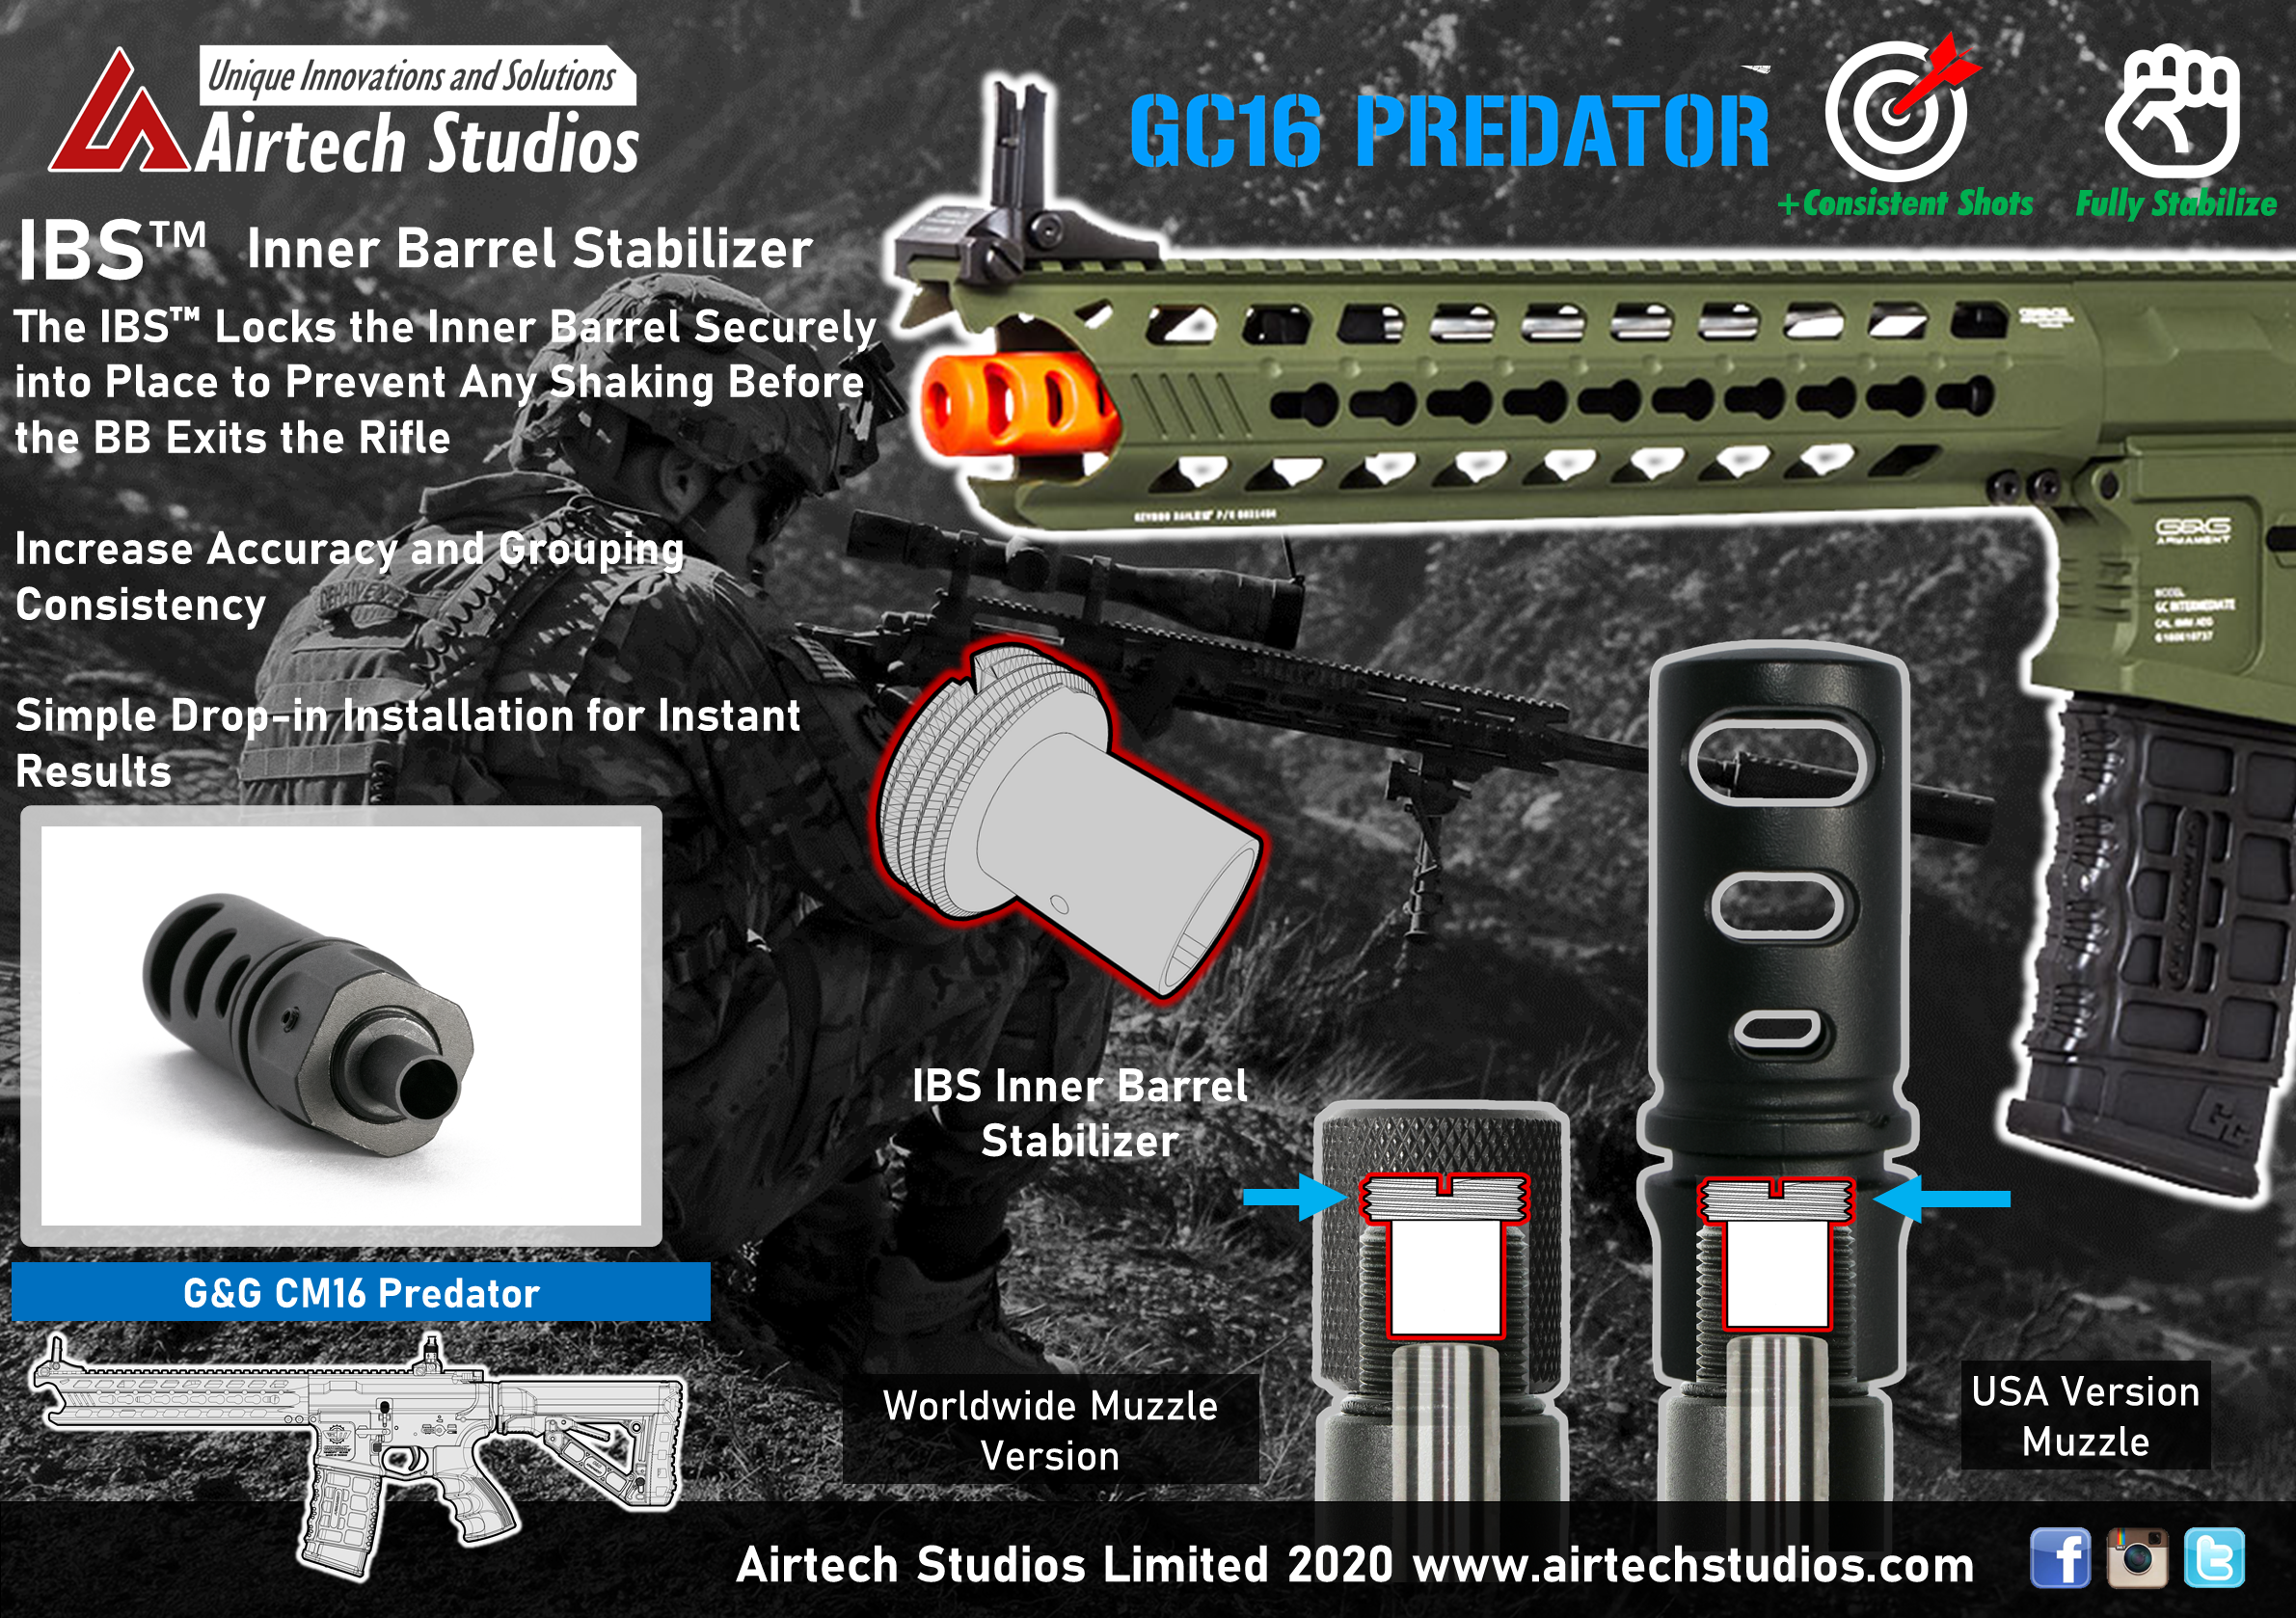 G G Cm16 Gc16 Predator Ibs Inner Barrel Stabilizer Airtech Studios